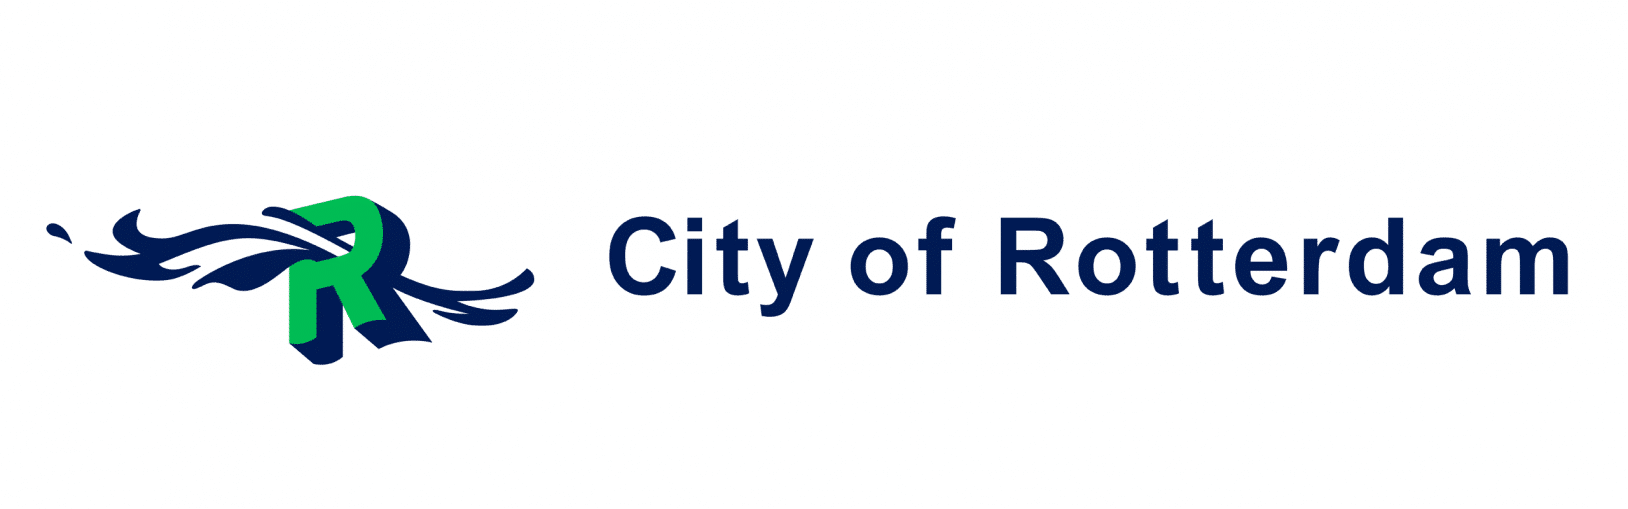 gemeente-rotterdam-logo.png